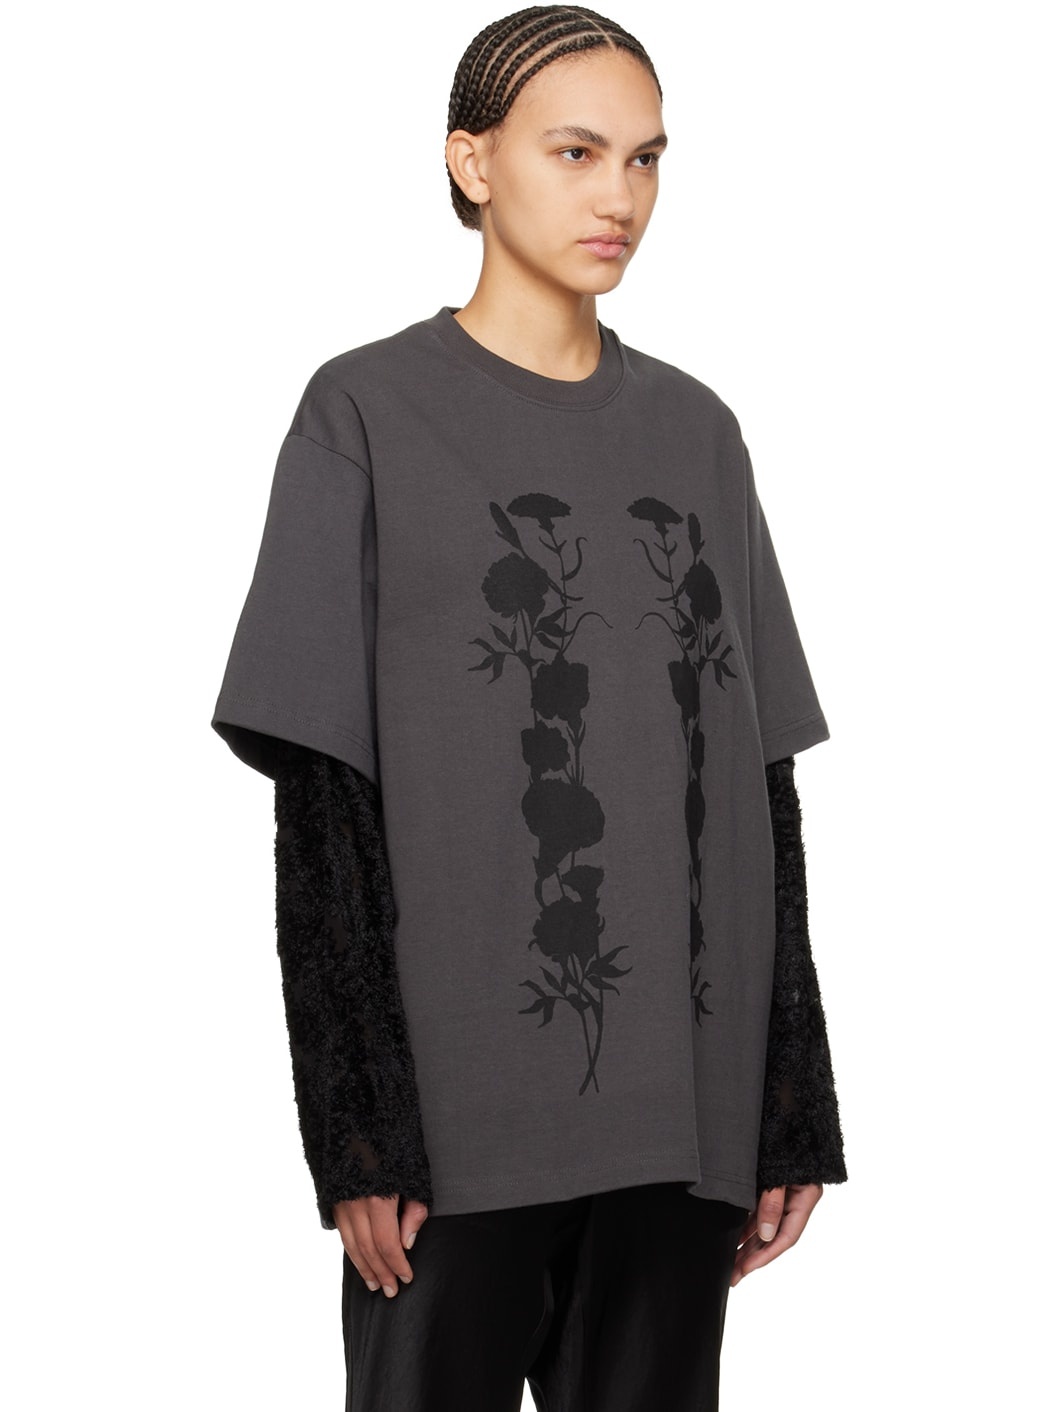 Gray 'Black Foliage' Long Sleeve T-Shirt - 2